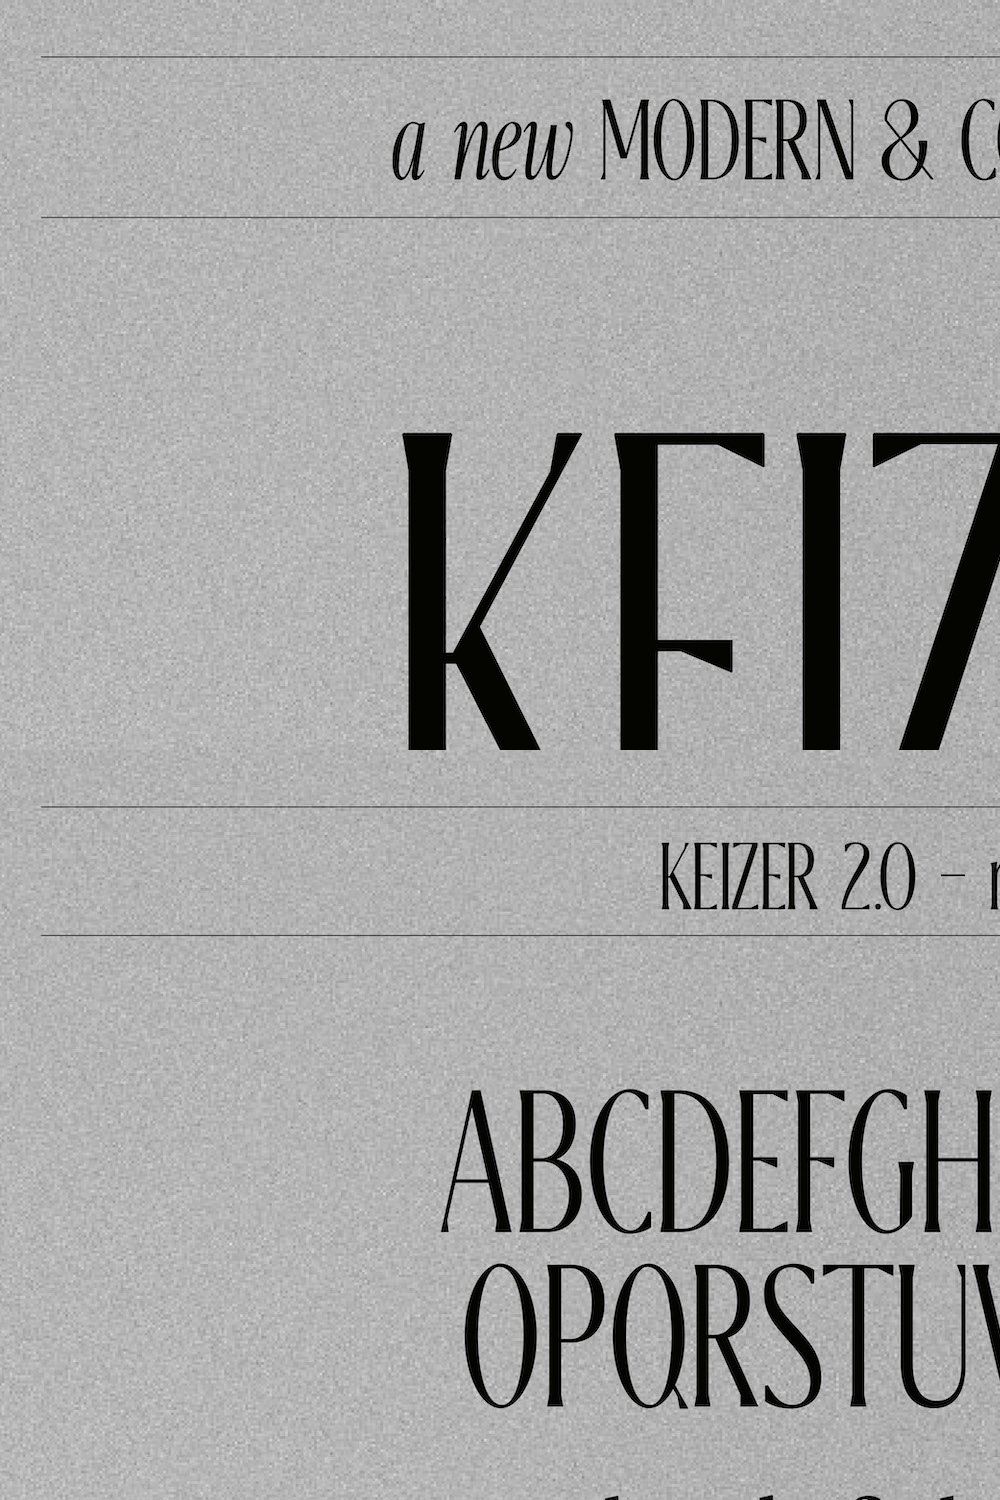 Keizer – Modern & Condensed Serif pinterest preview image.